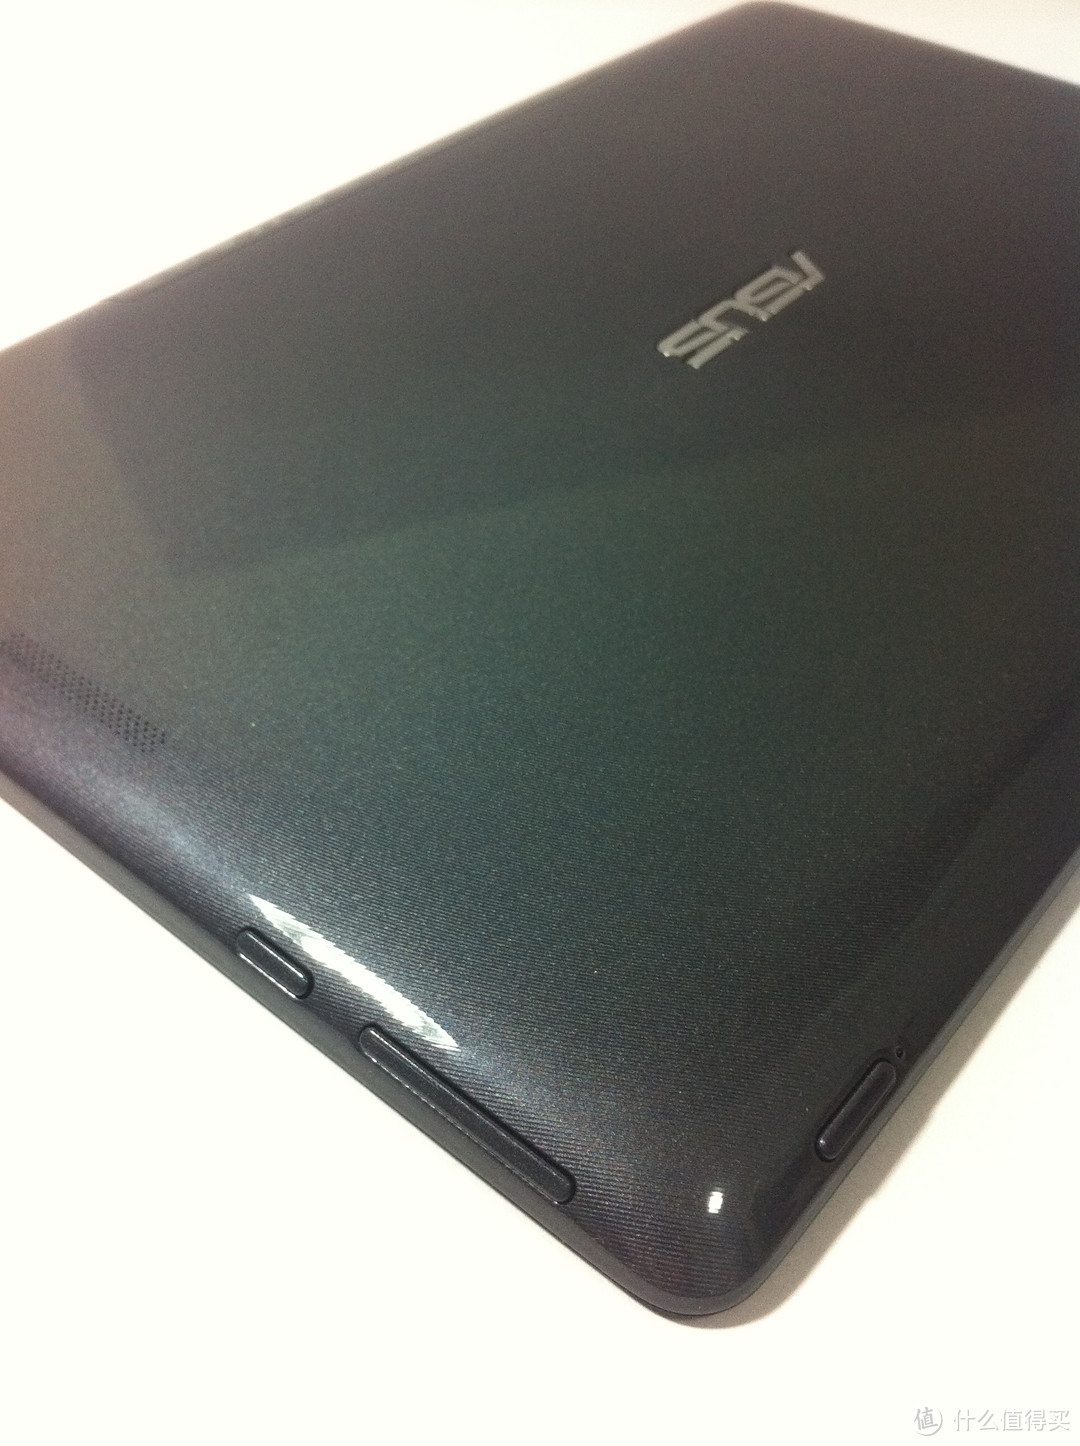 ASUS 华硕 T100TA 10.1英寸变形平板笔记本